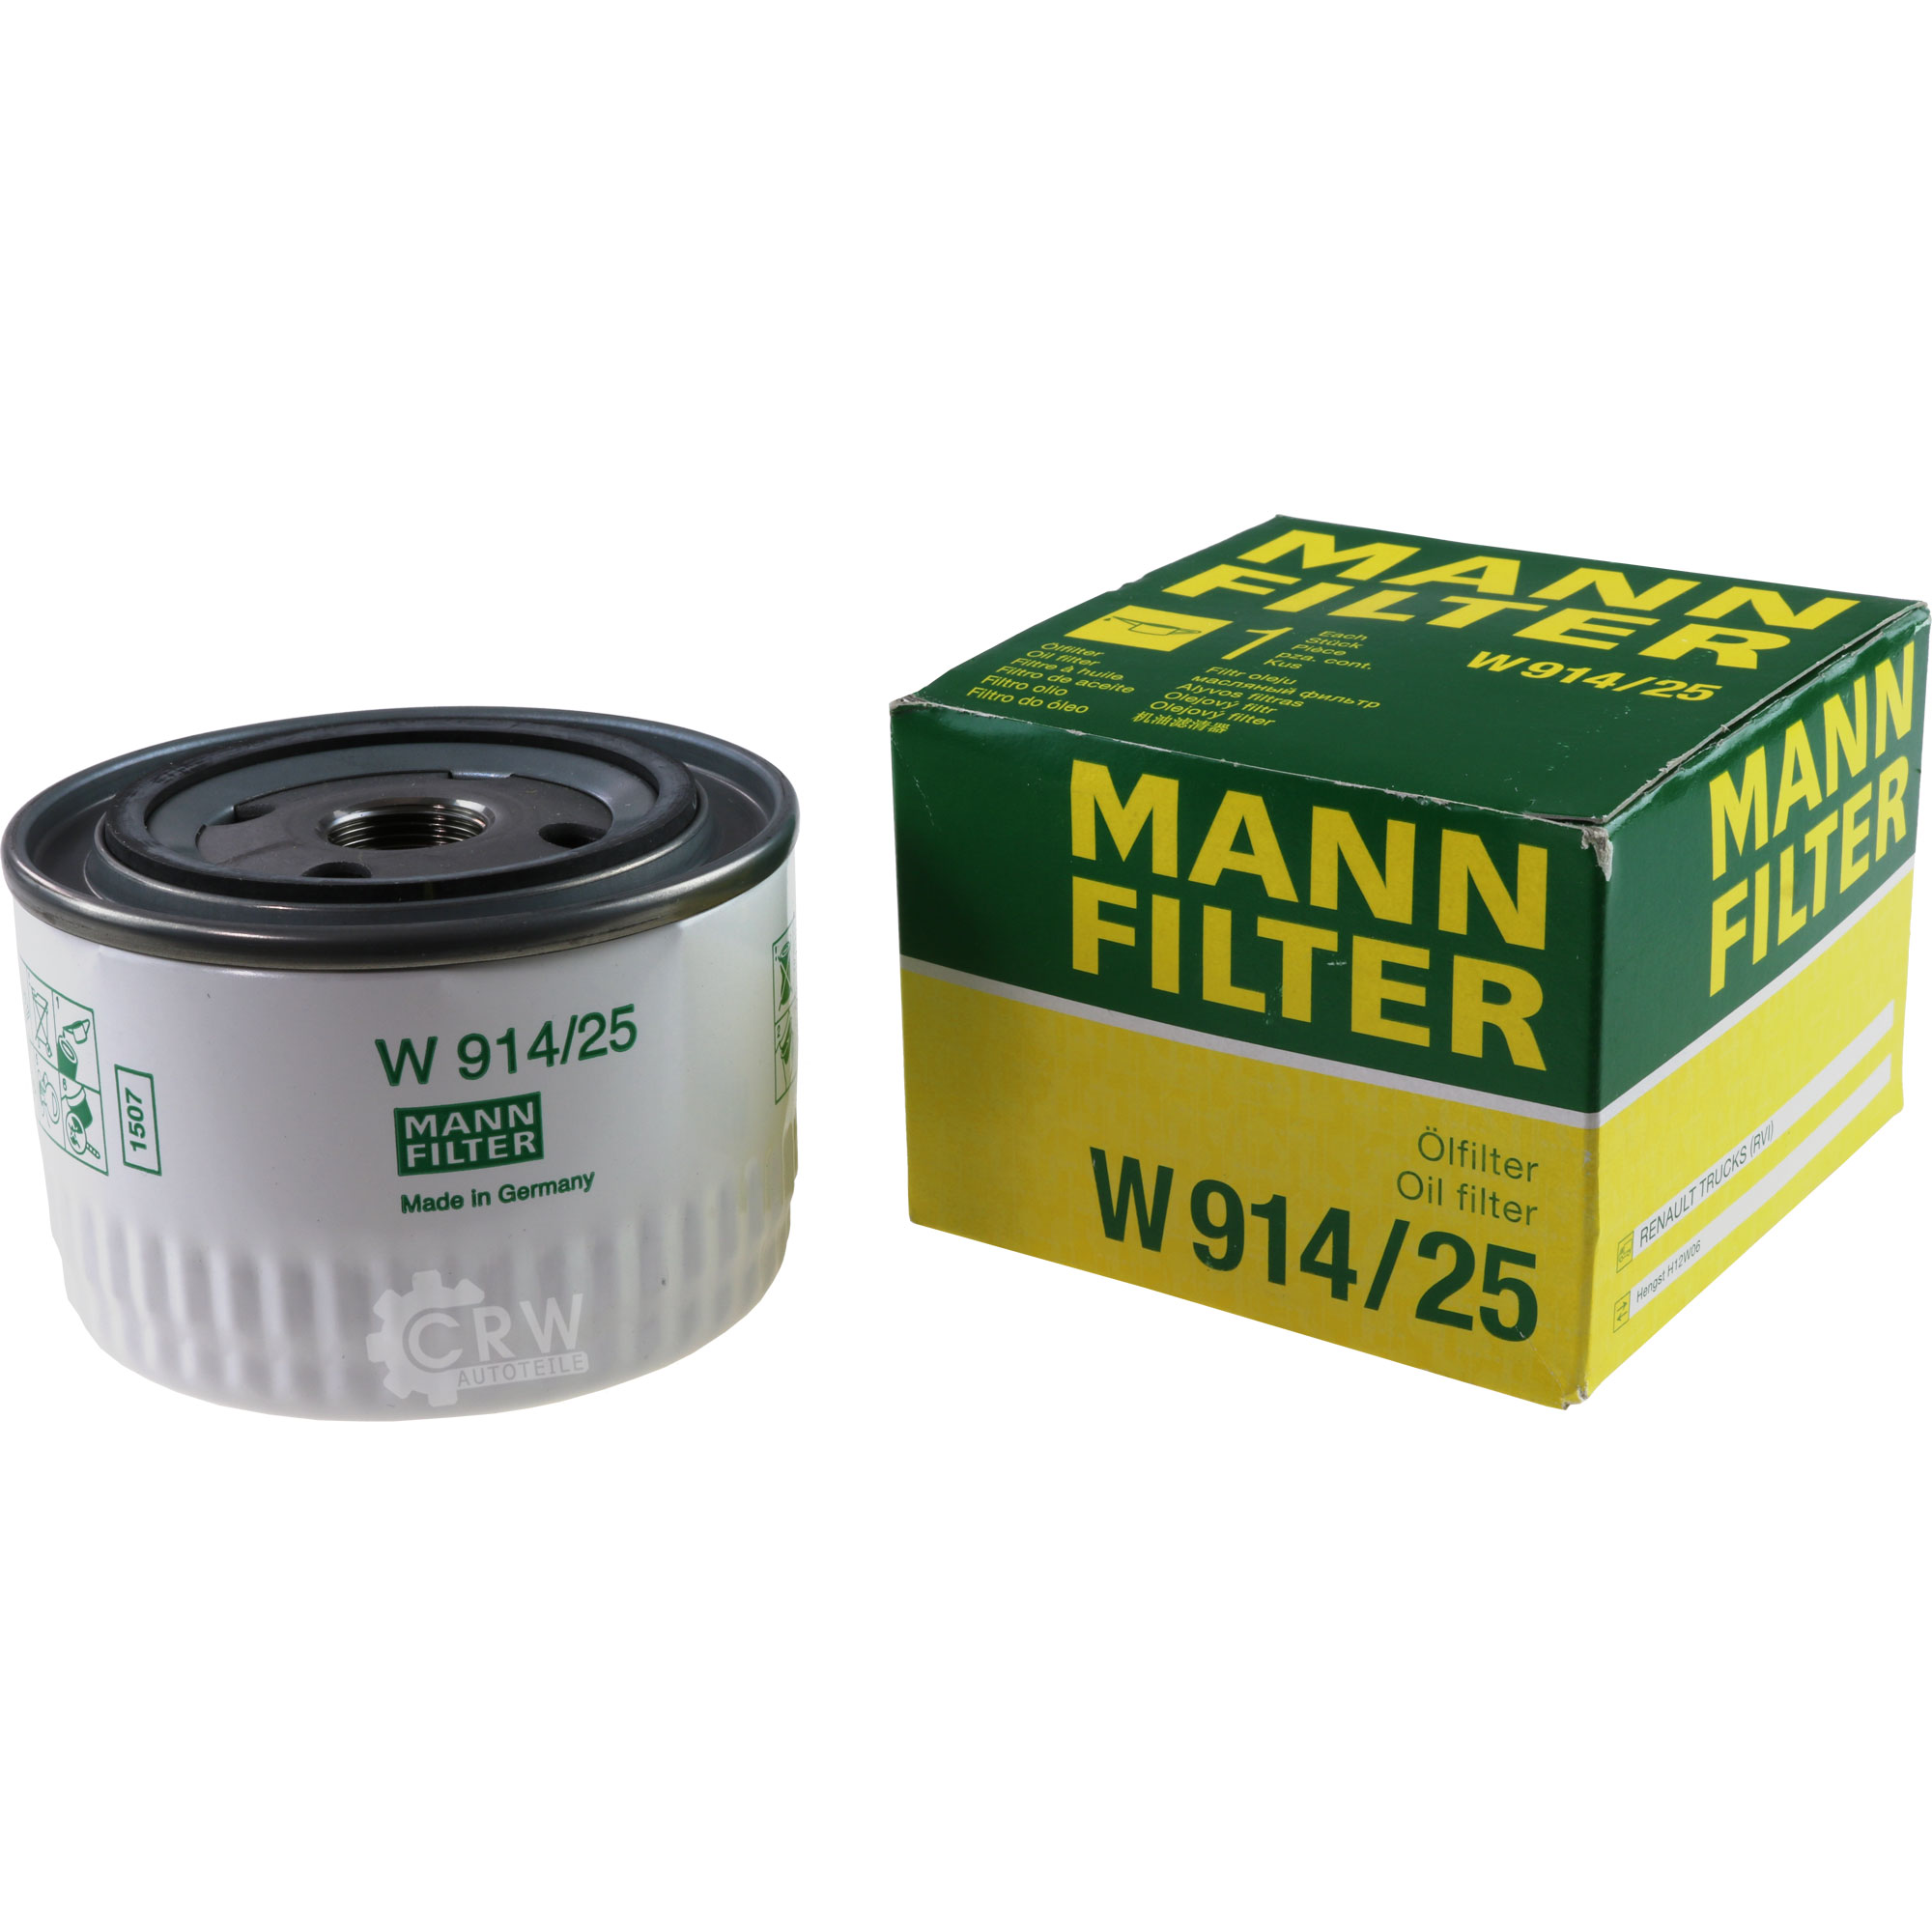 MANN-FILTER Hydraulikfilter für Automatikgetriebe W 914/25